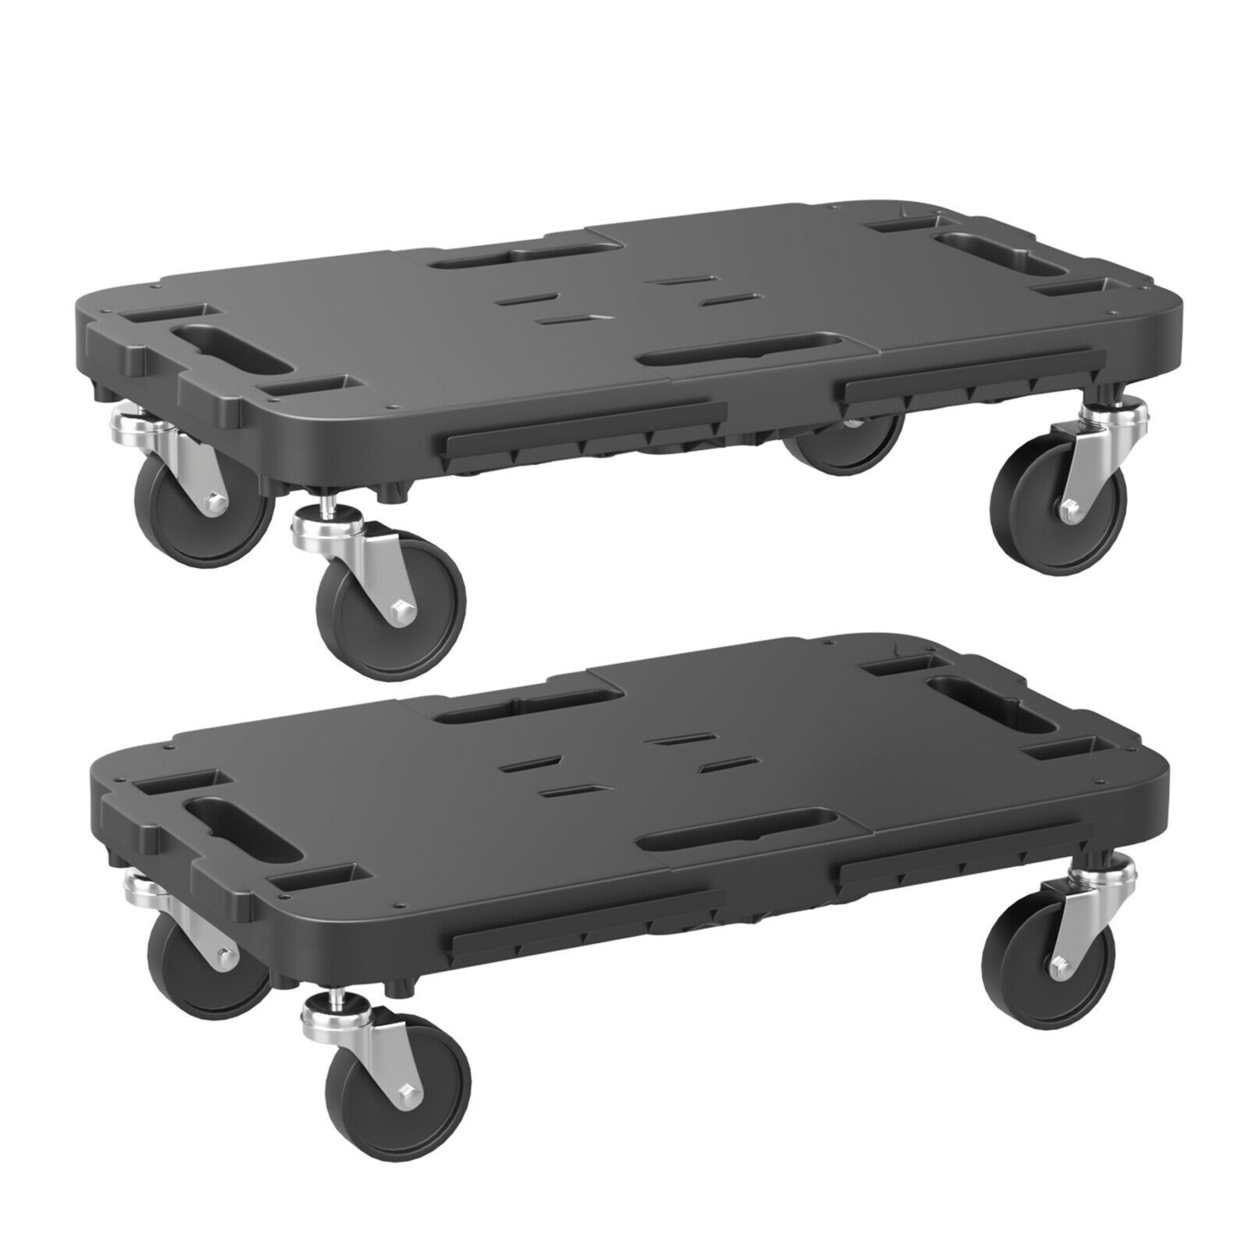 Platform Dolly Interlocking Furniture Mover 660lbs Weight Capacity - 3 Pcs